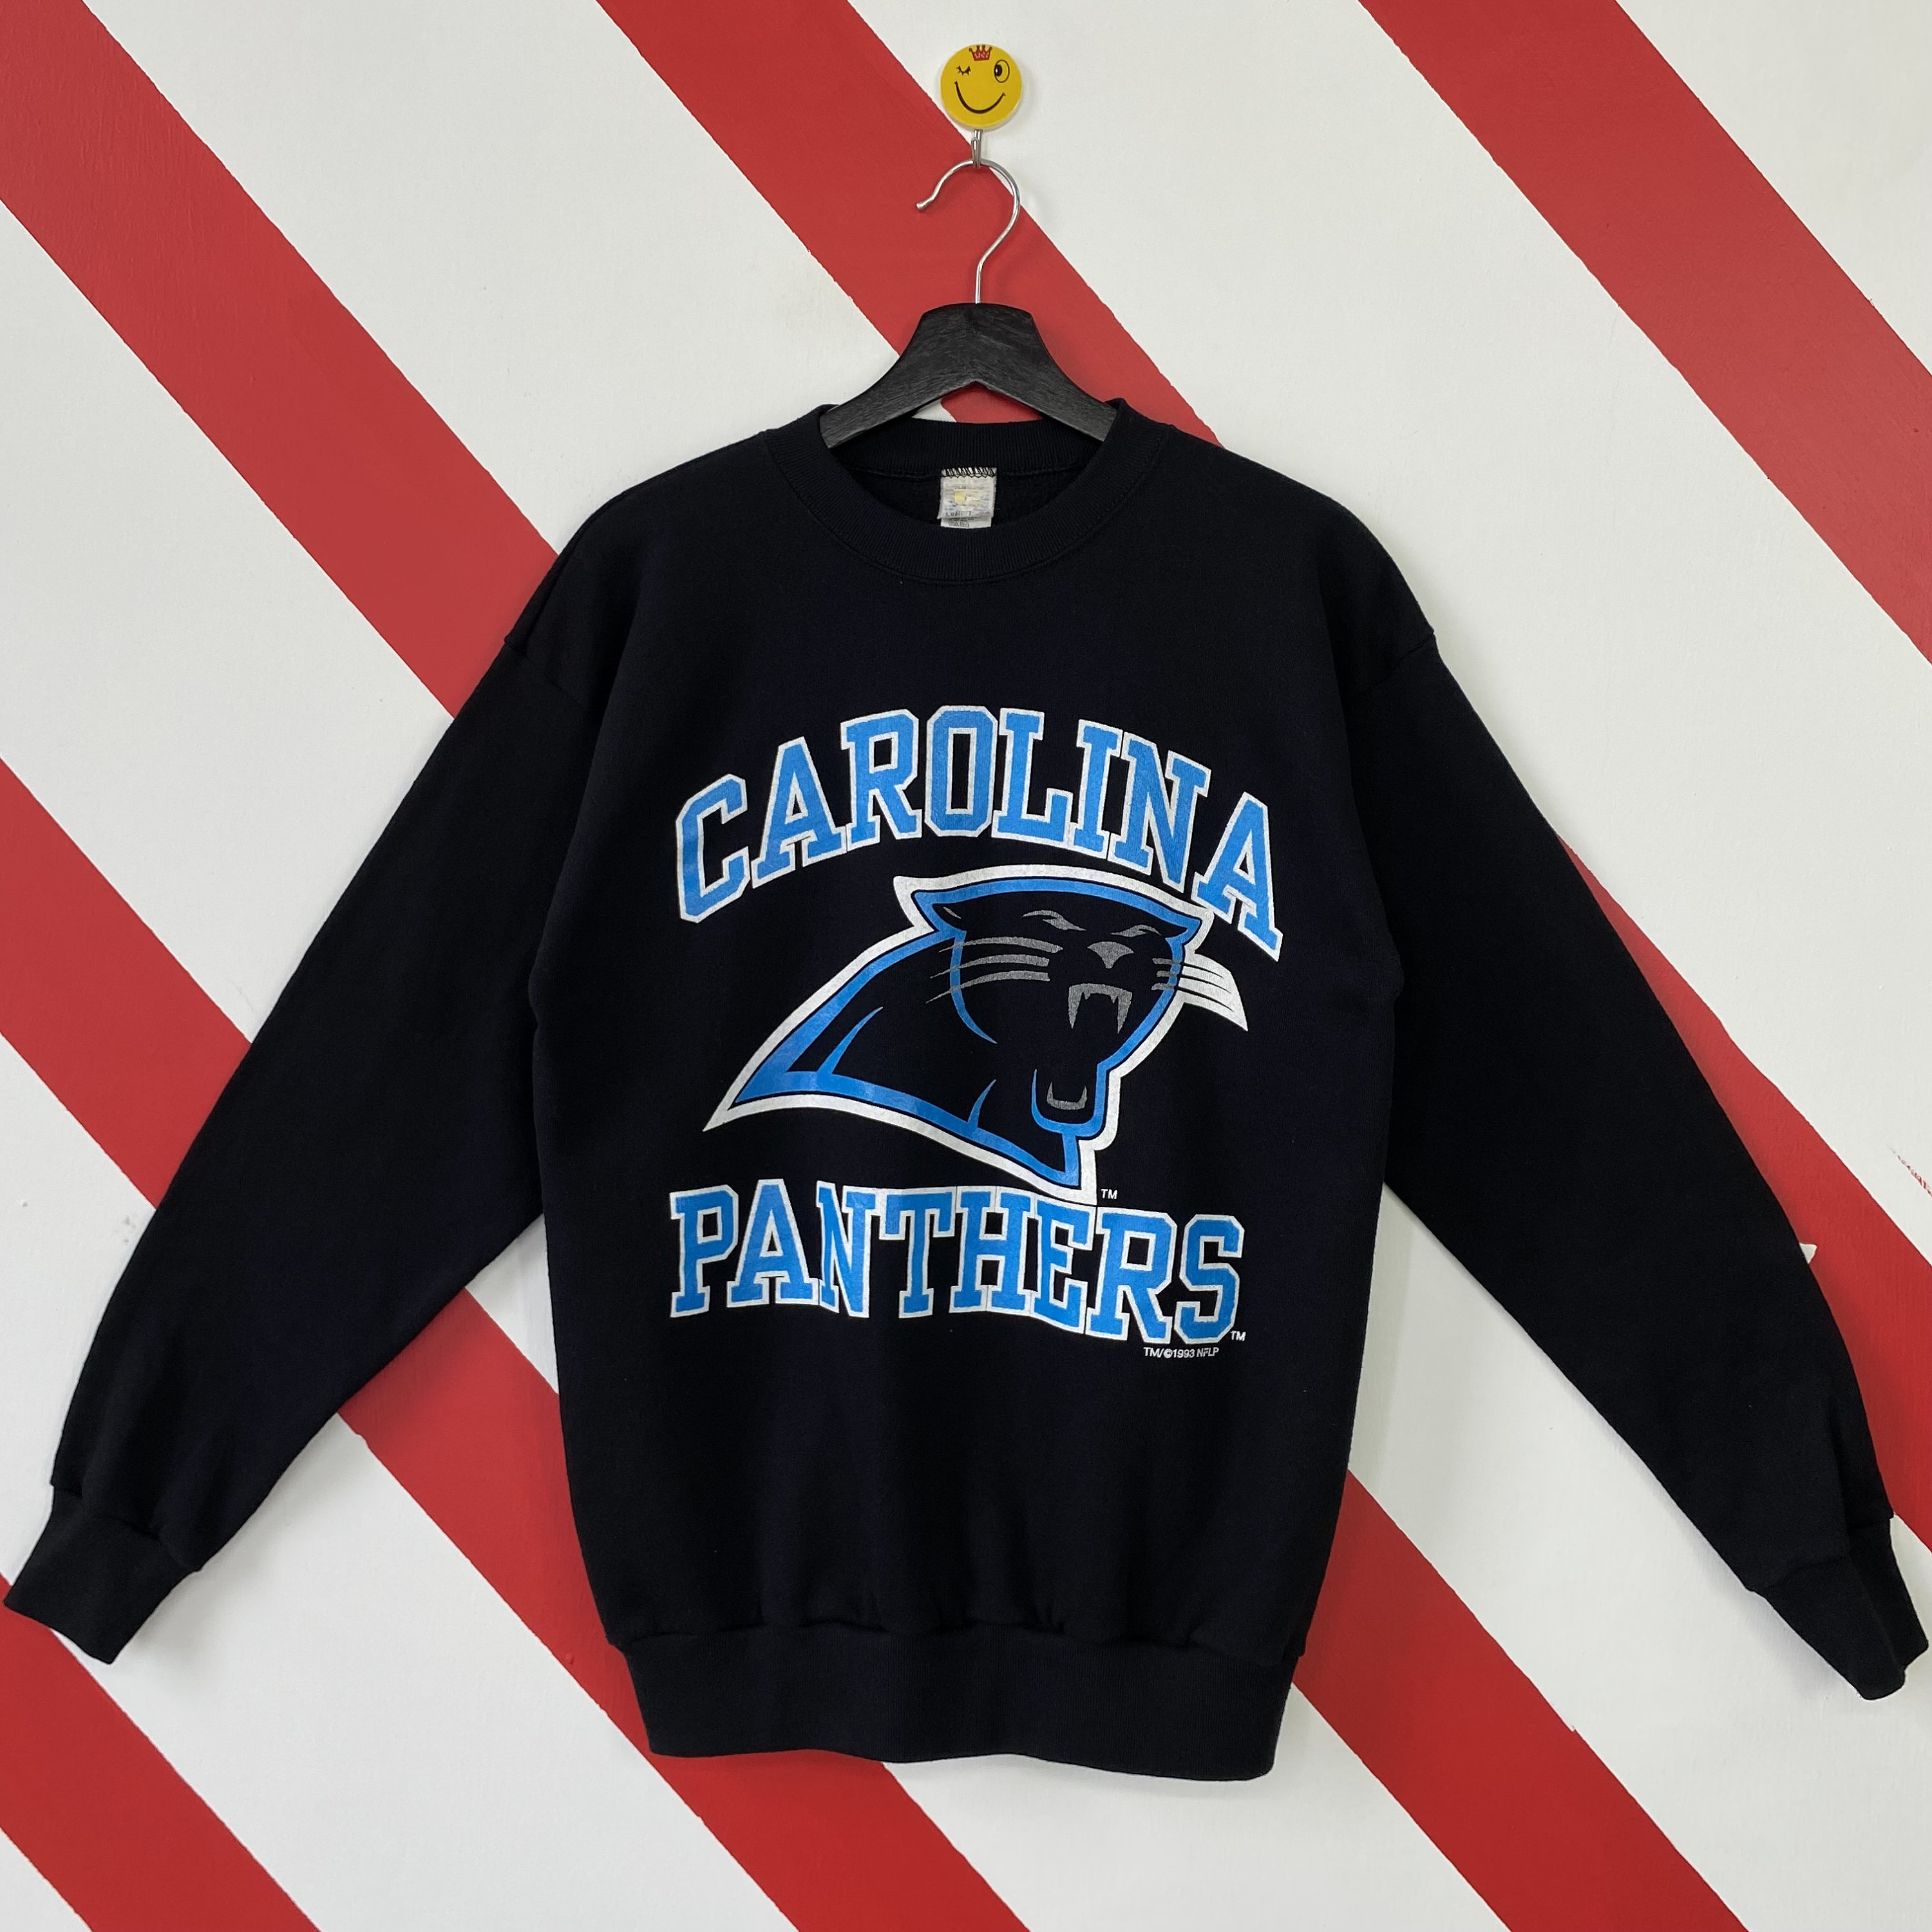 Vintage 1990s Black Panther Teal Crewneck Sweater